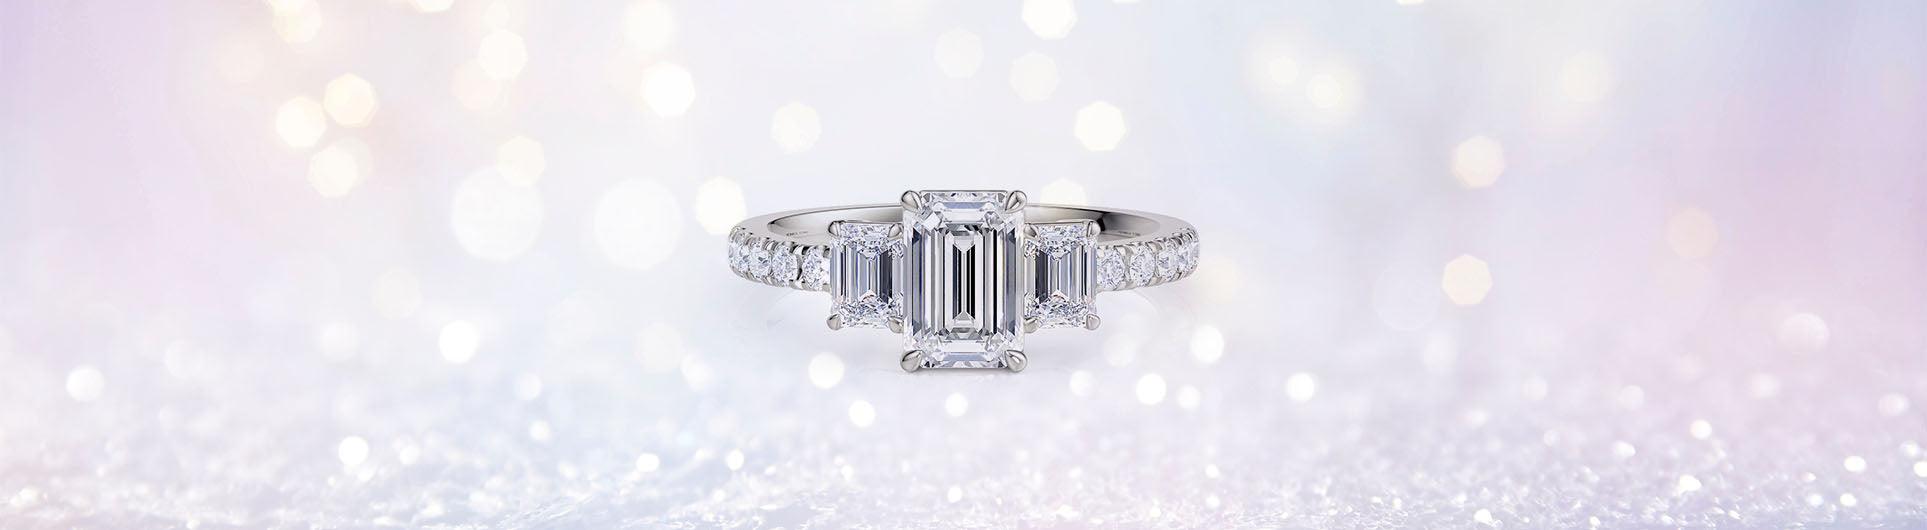 Emerald Cut Diamond Engagement Rings - Monroe Yorke Diamonds